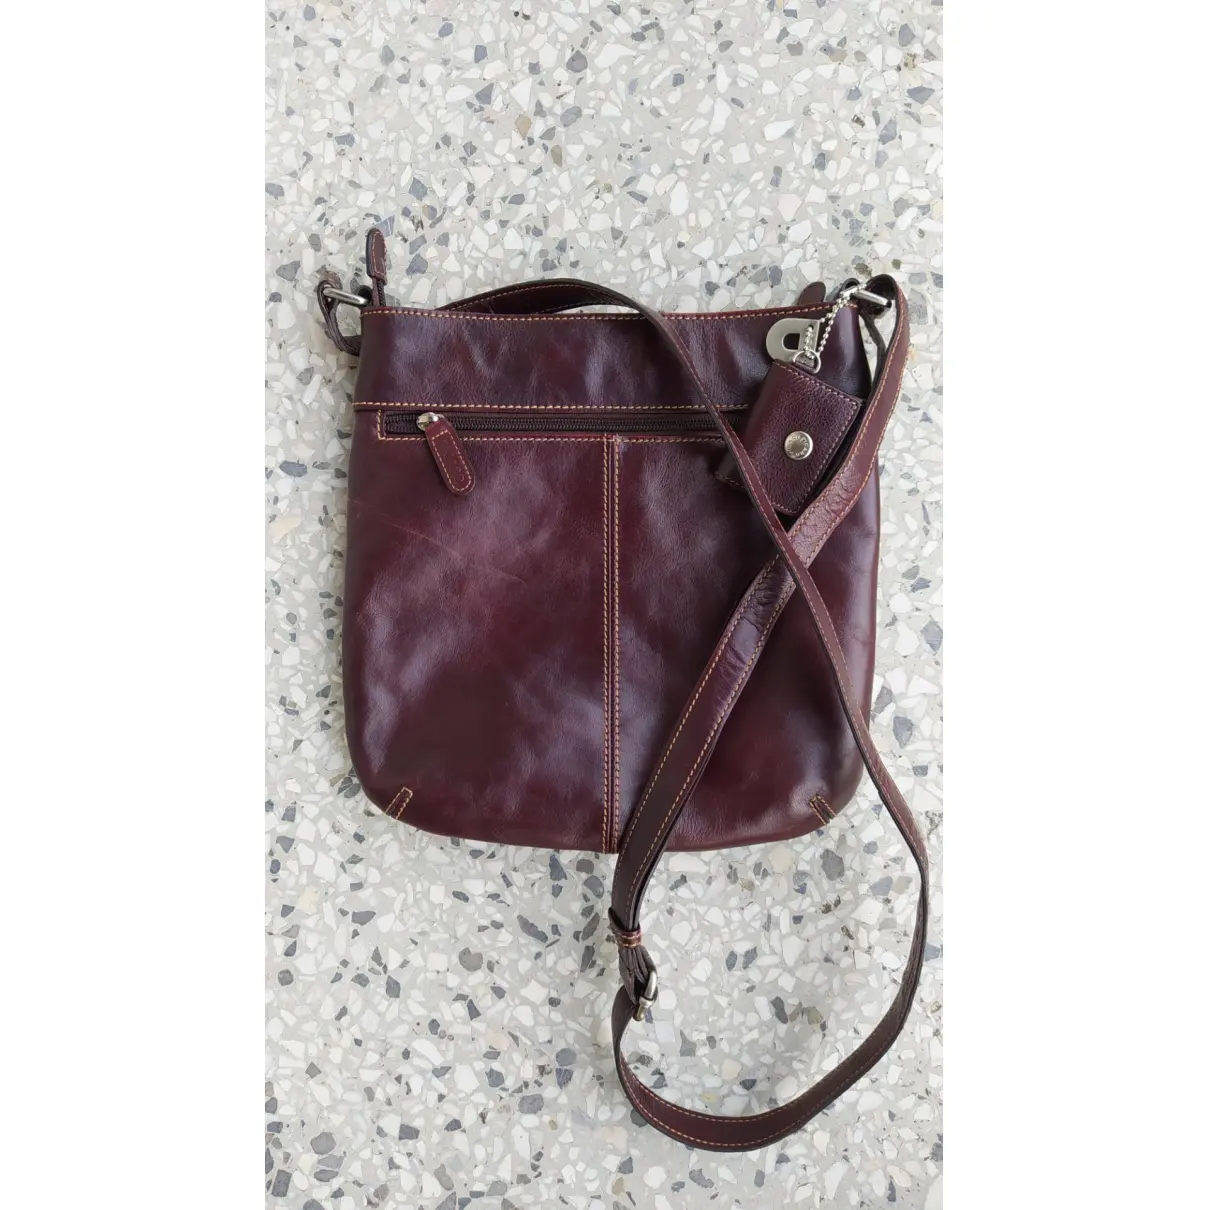 Buy Picard Leather crossbody bag online